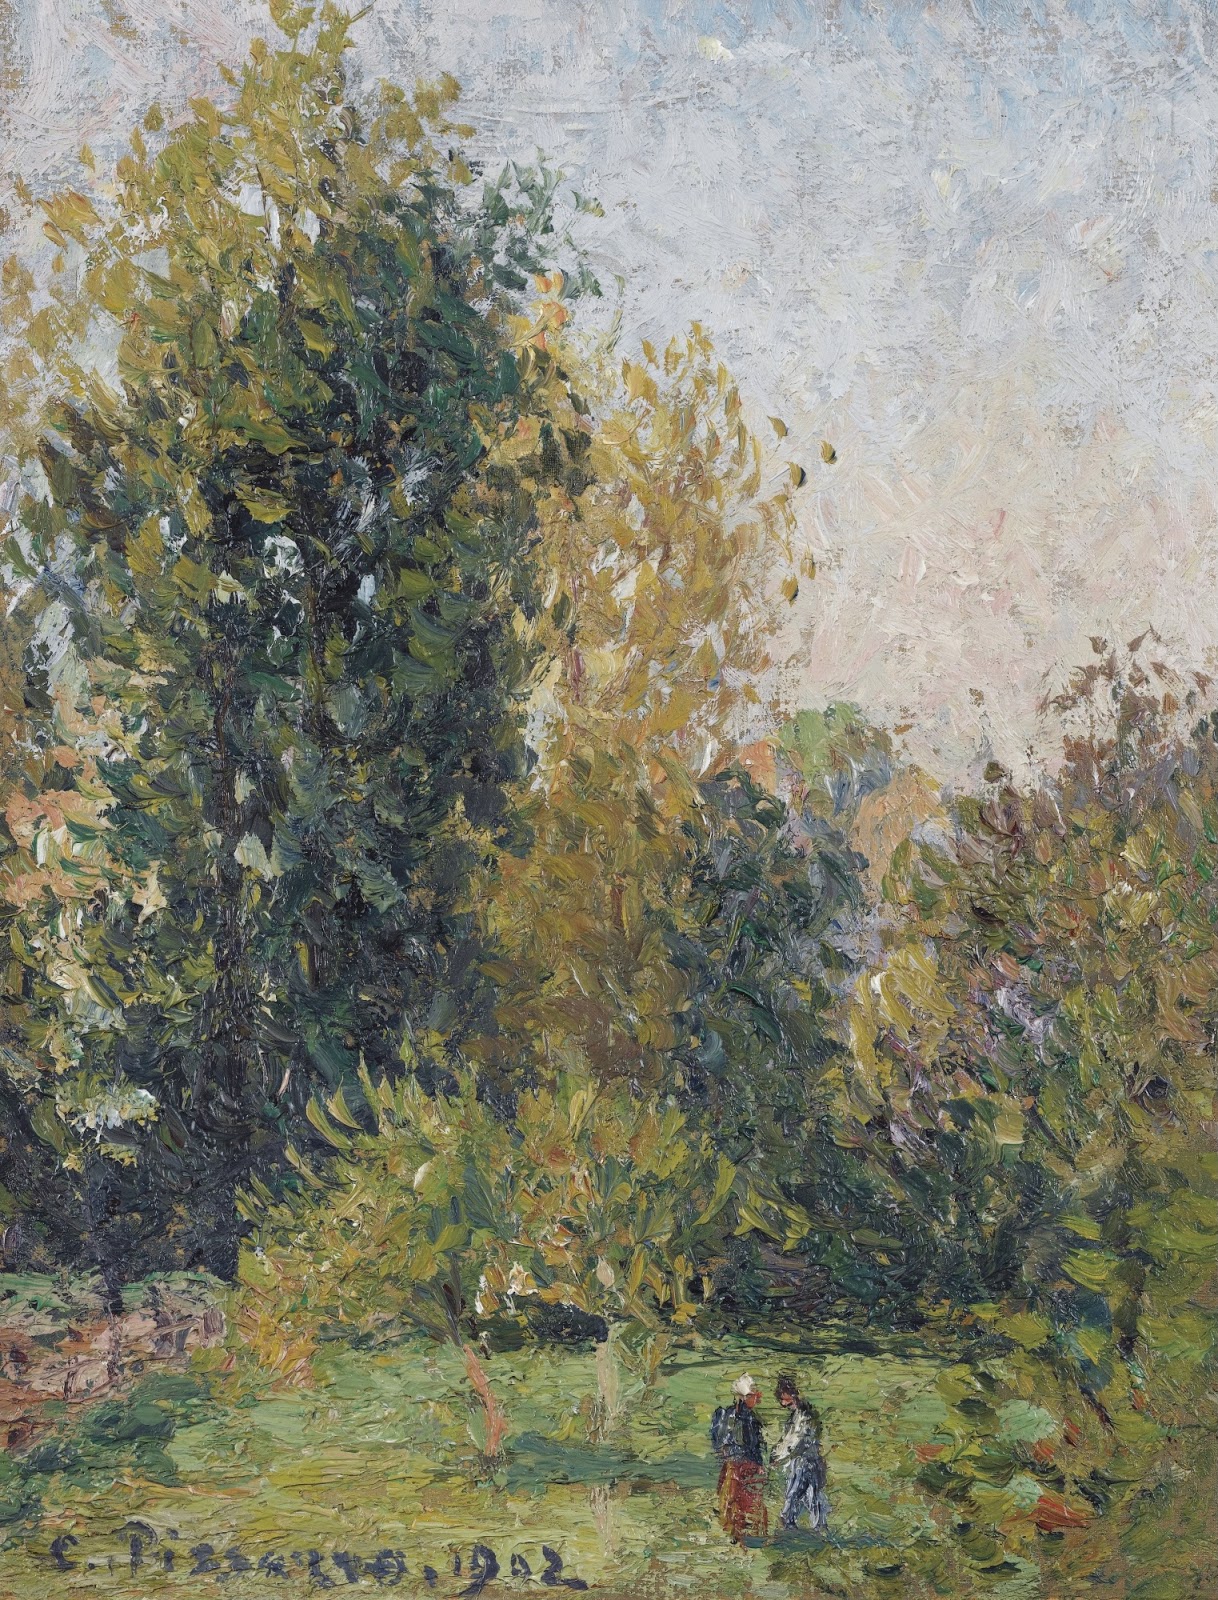 Camille+Pissarro-1830-1903 (387).jpg